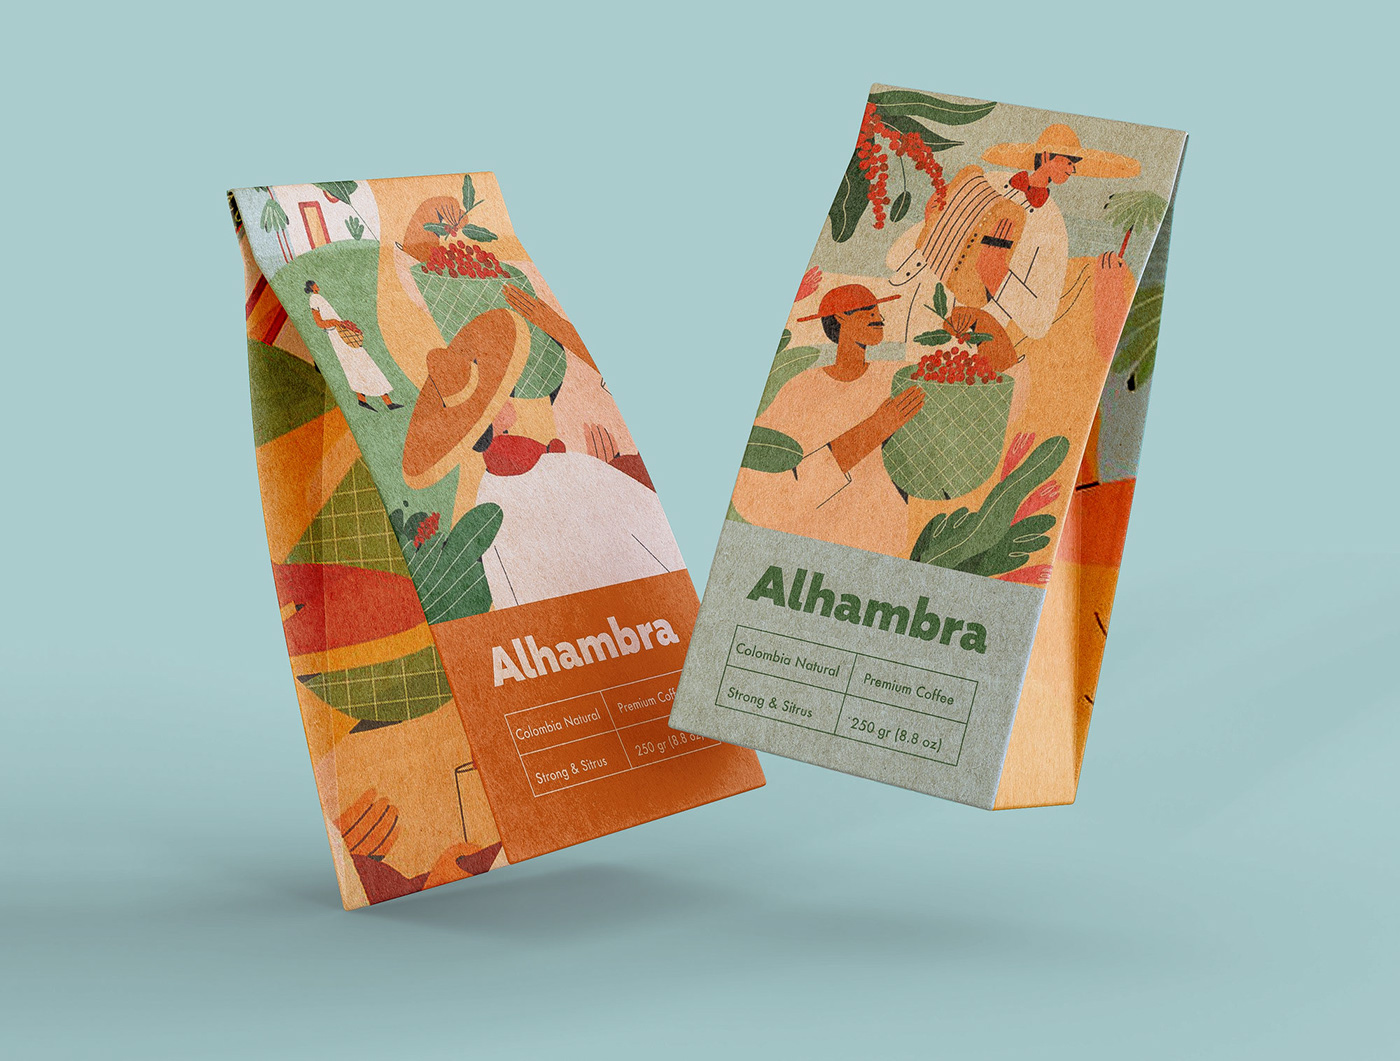 Alhambra coffee packaging designed by Gulshan Mirzayeva